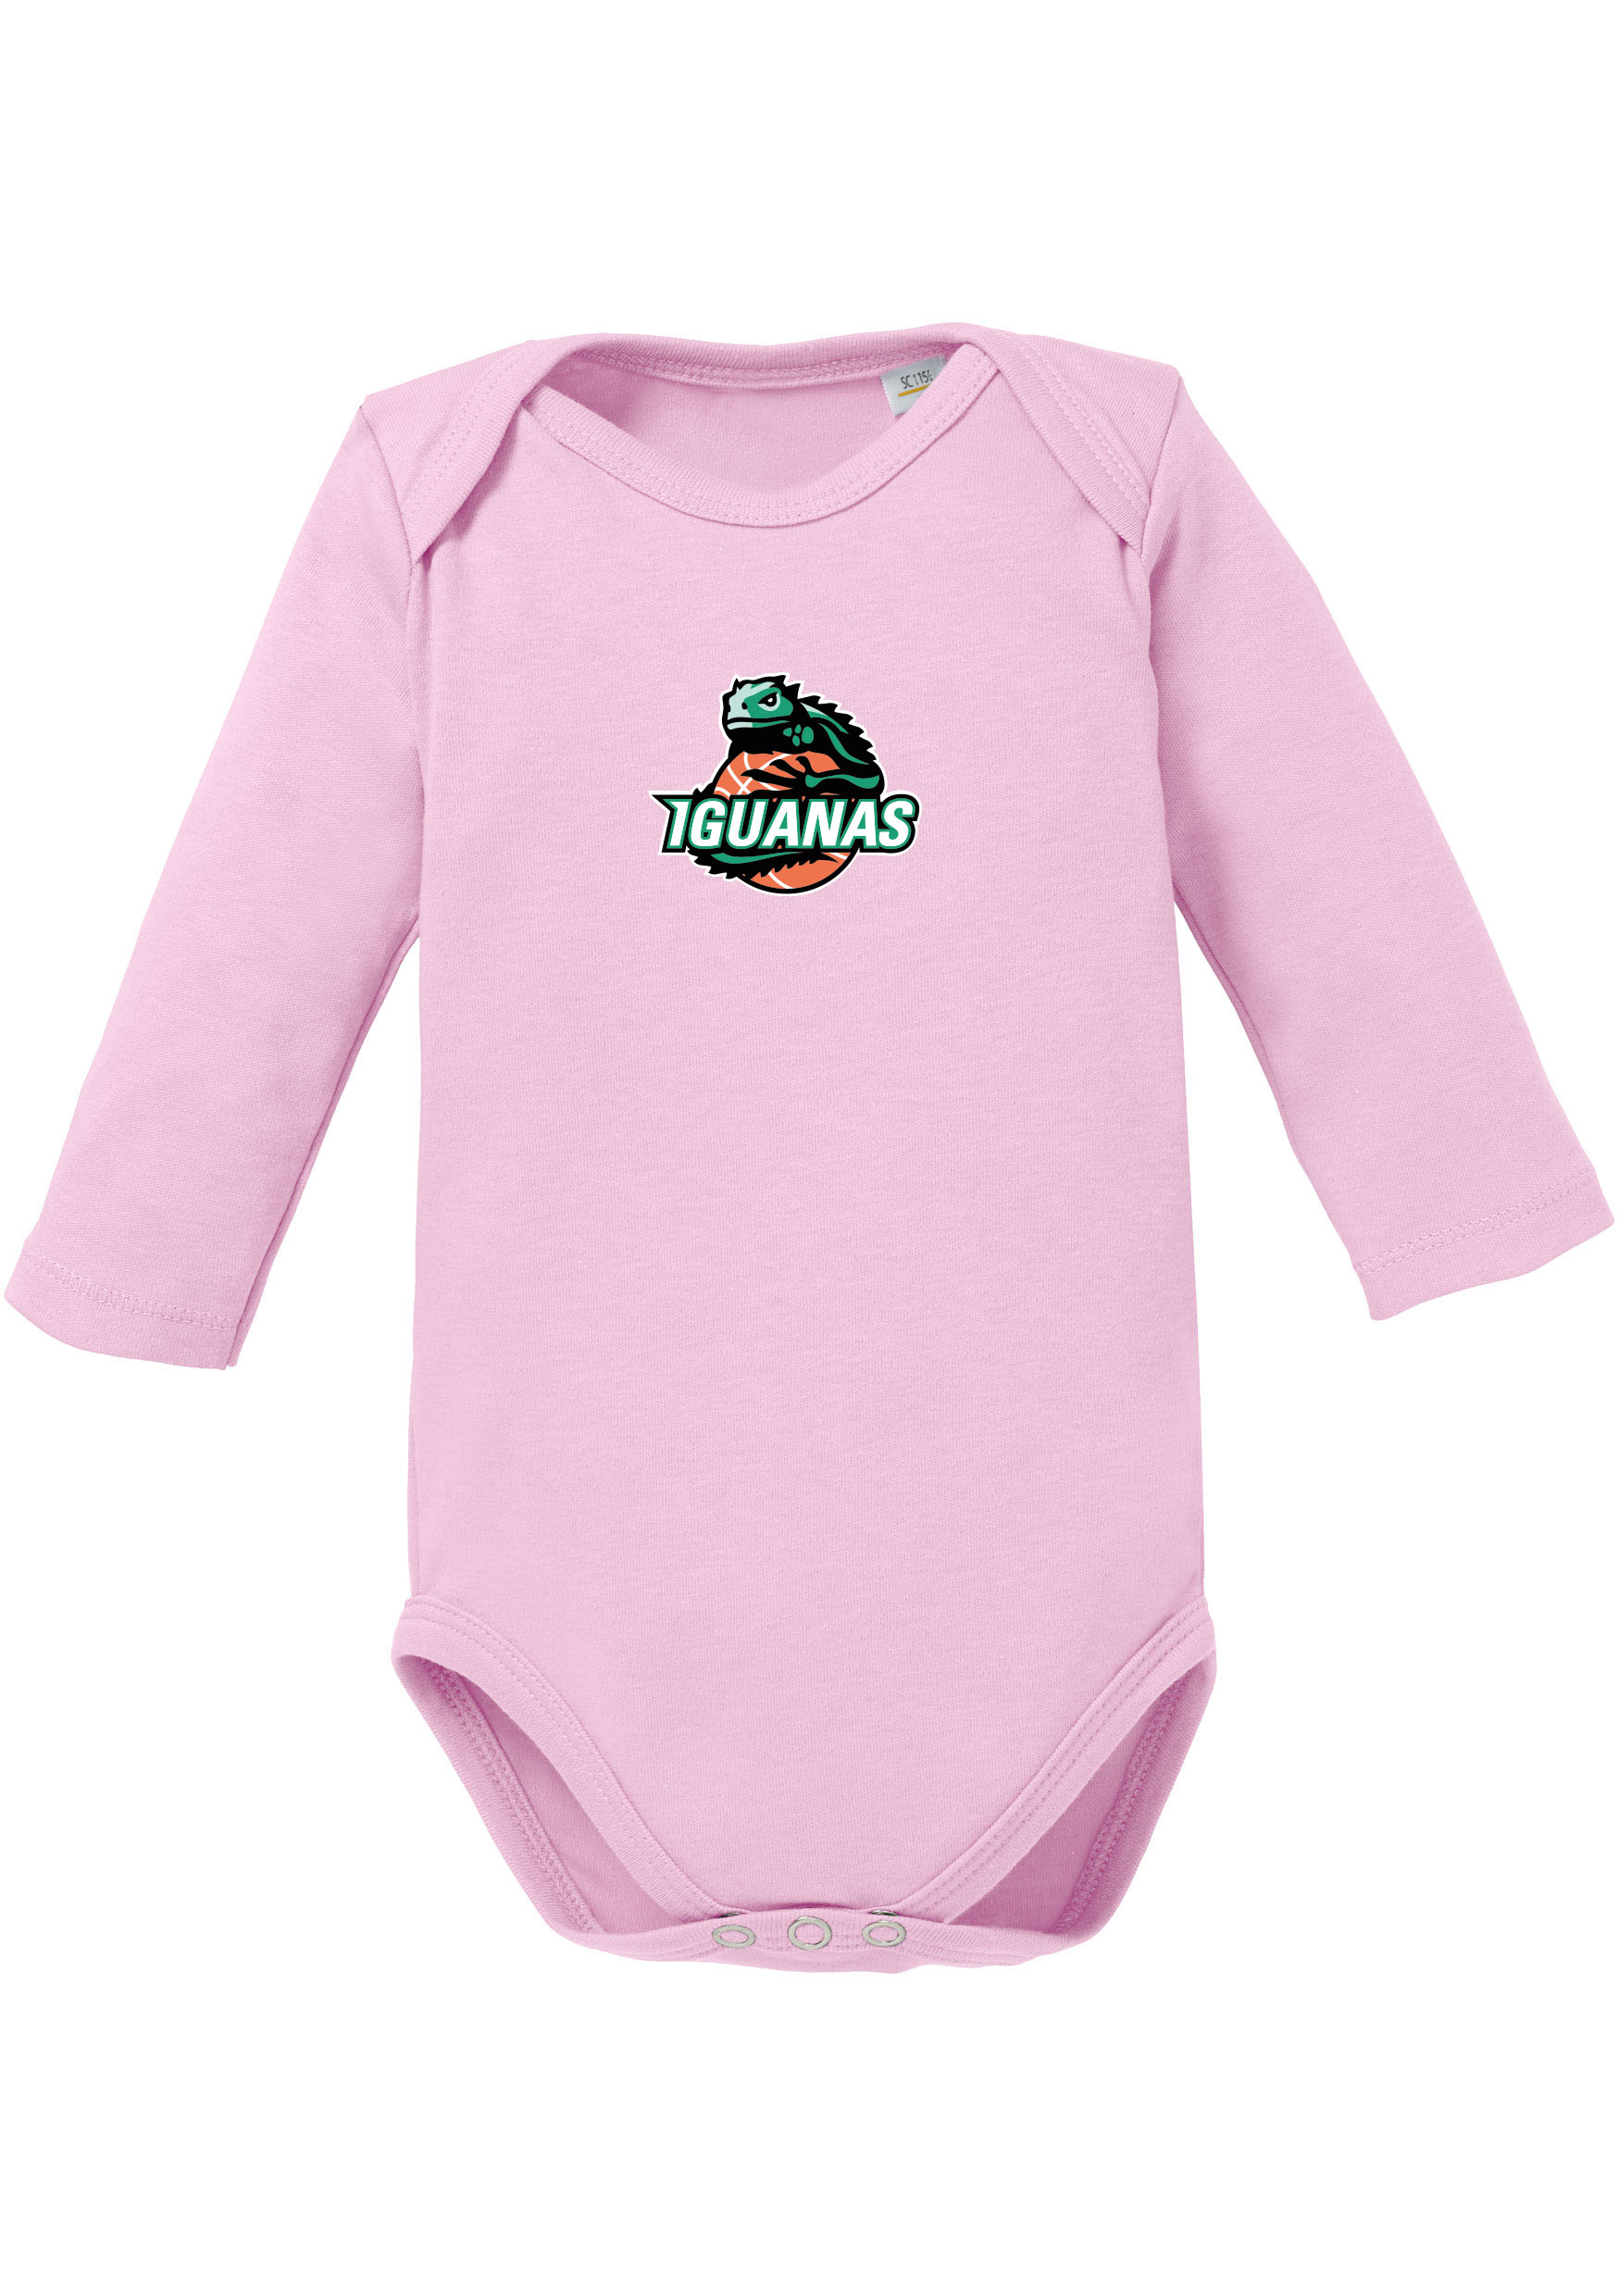 Iguanas Baby Body